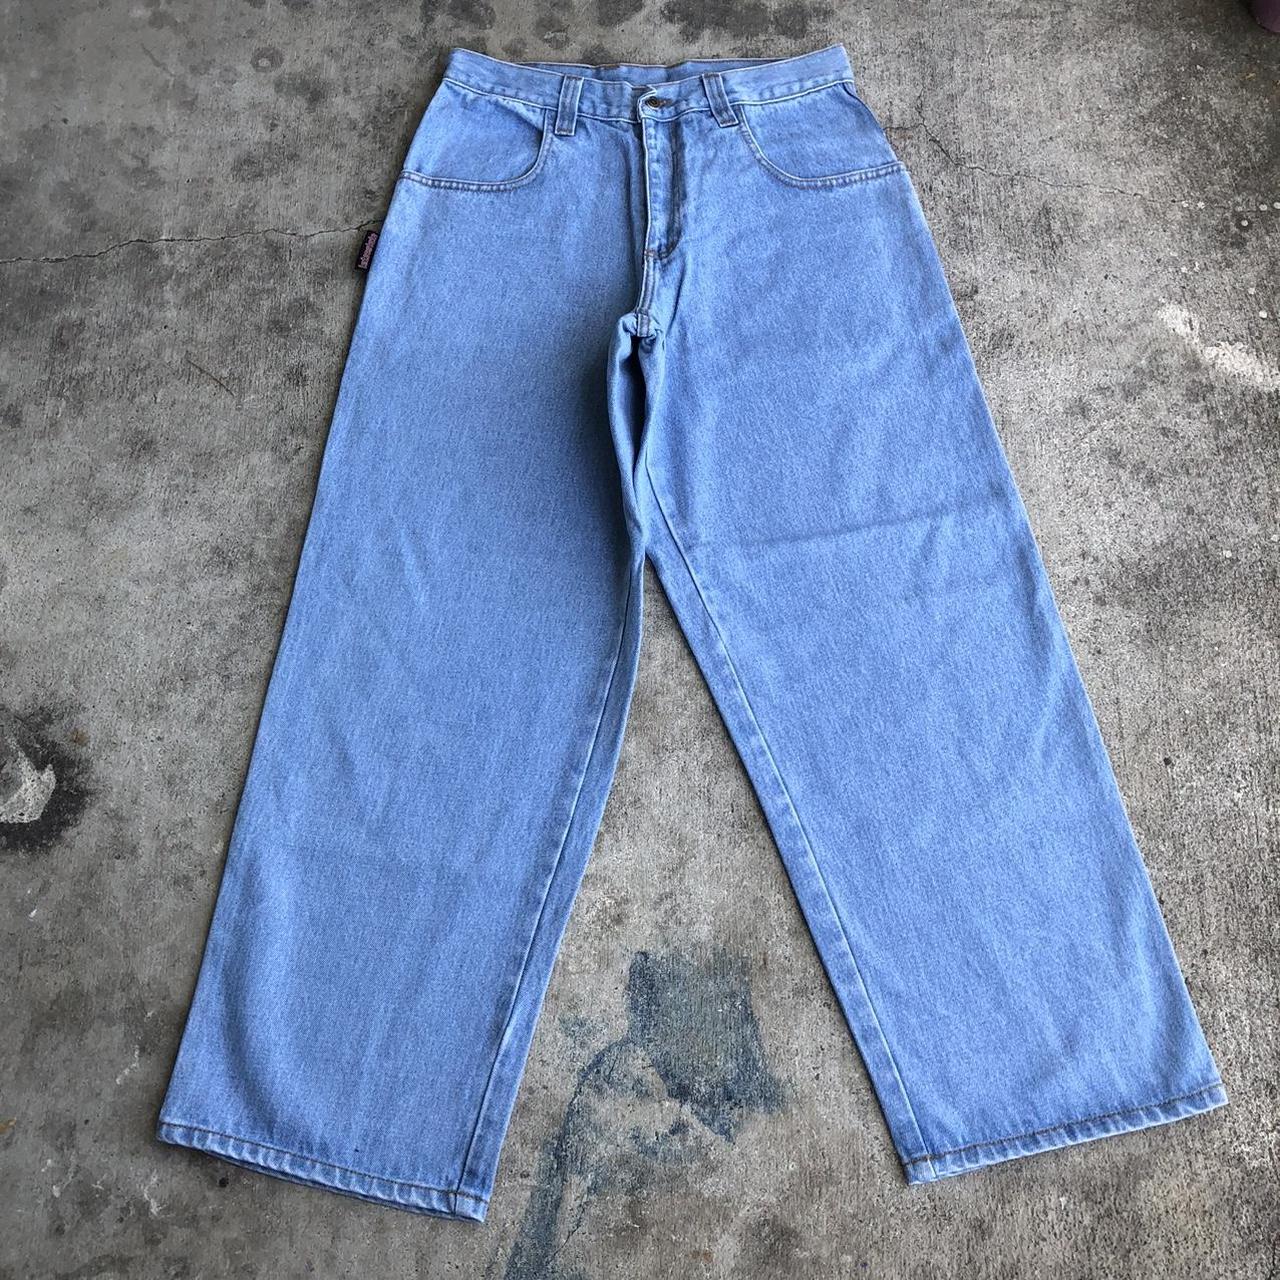 Vintage deadstock Interstate jeans size 30 X 30 🌀... - Depop